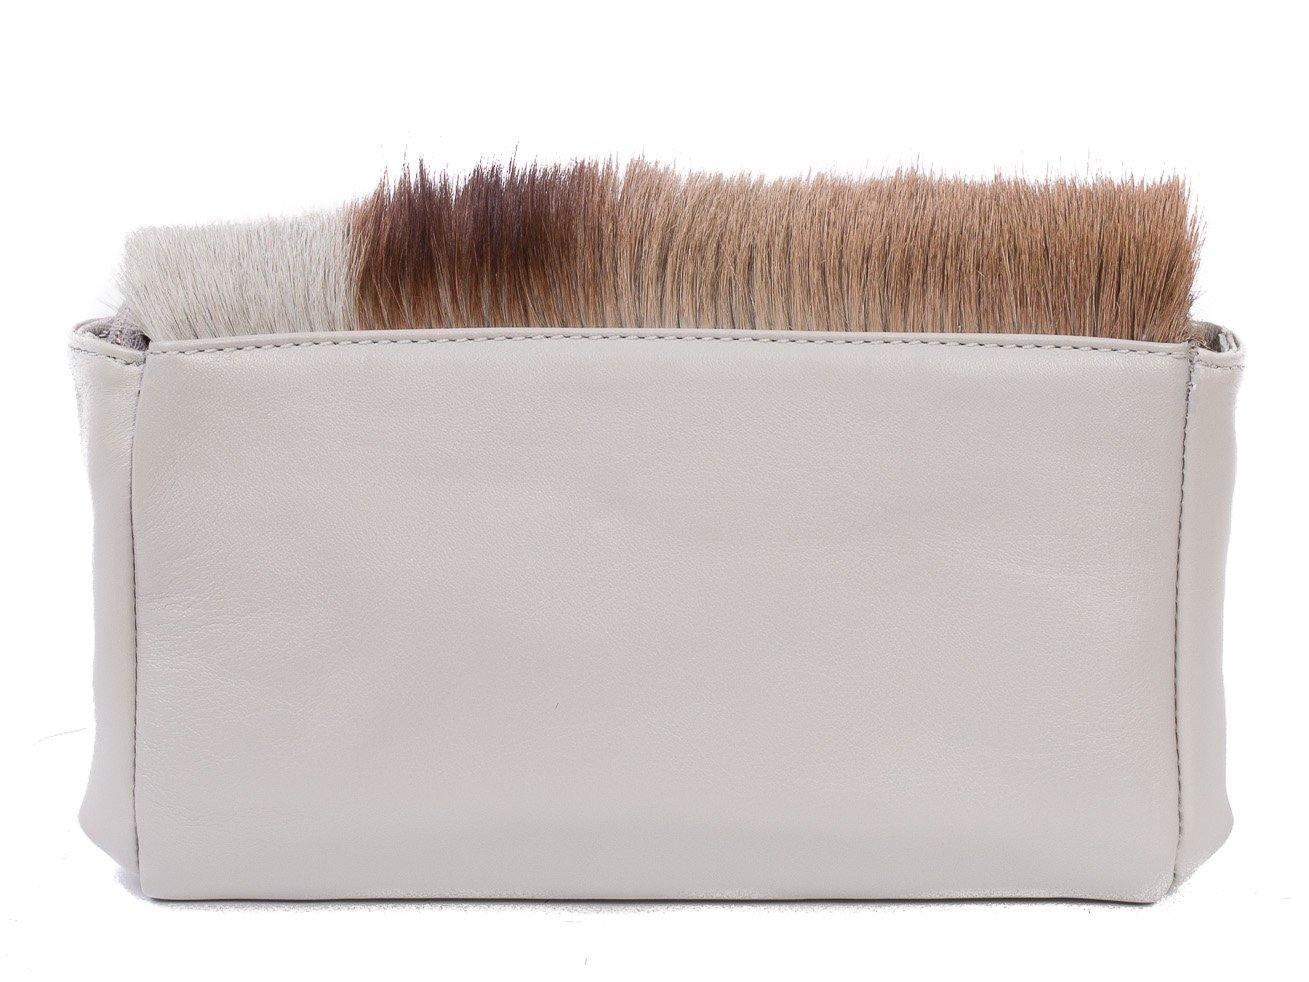 sherene melinda springbok hair-on-hide earth leather Sophy SS18 Clutch Bag Stripe back